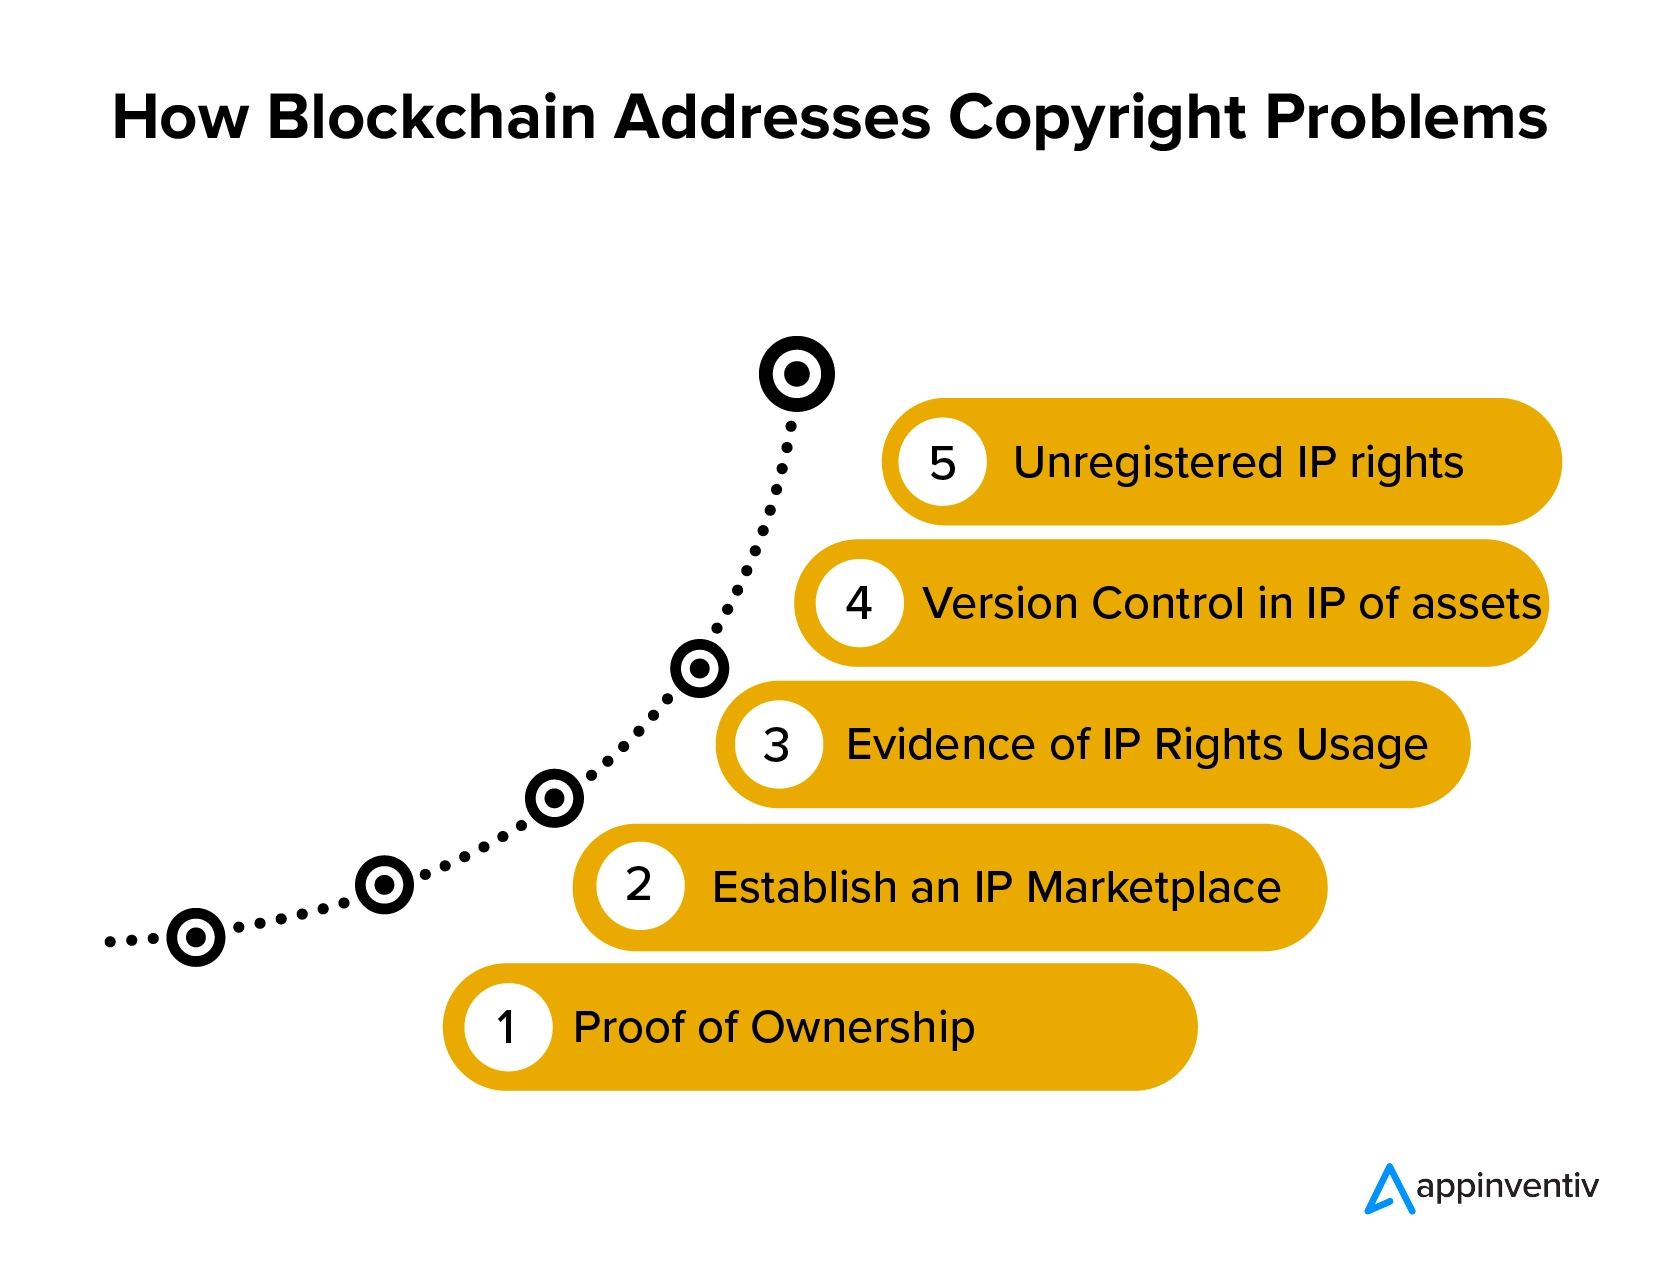 Blockchain addresses copyright problems